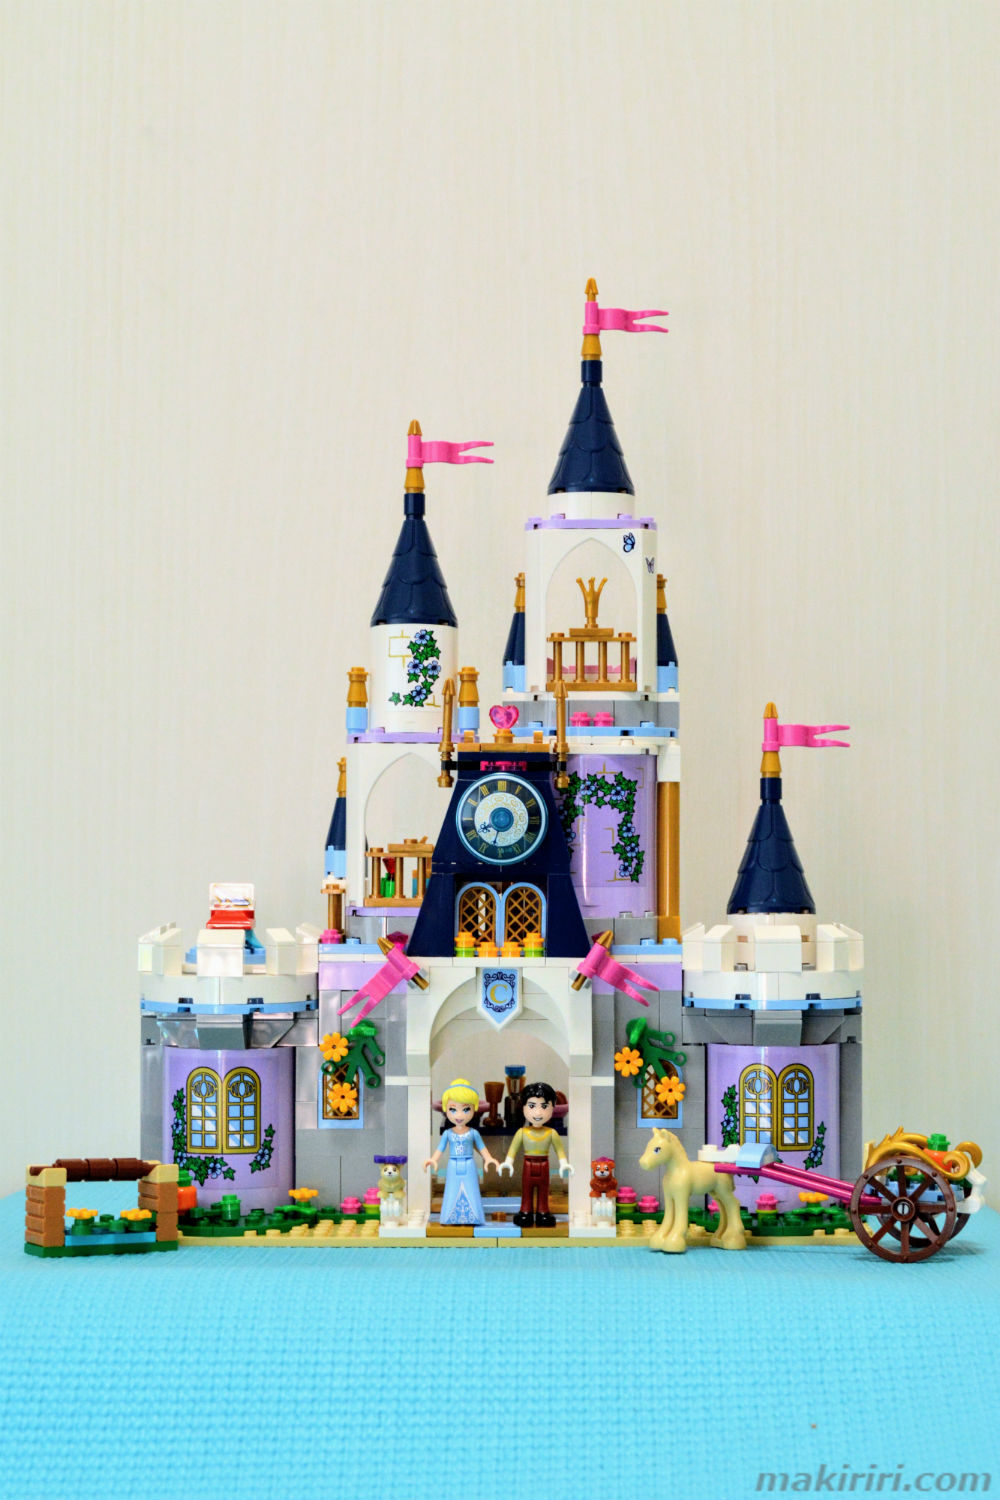 LEGO】ディズニープリンセス 41154 シンデレラのお城(2018年発売